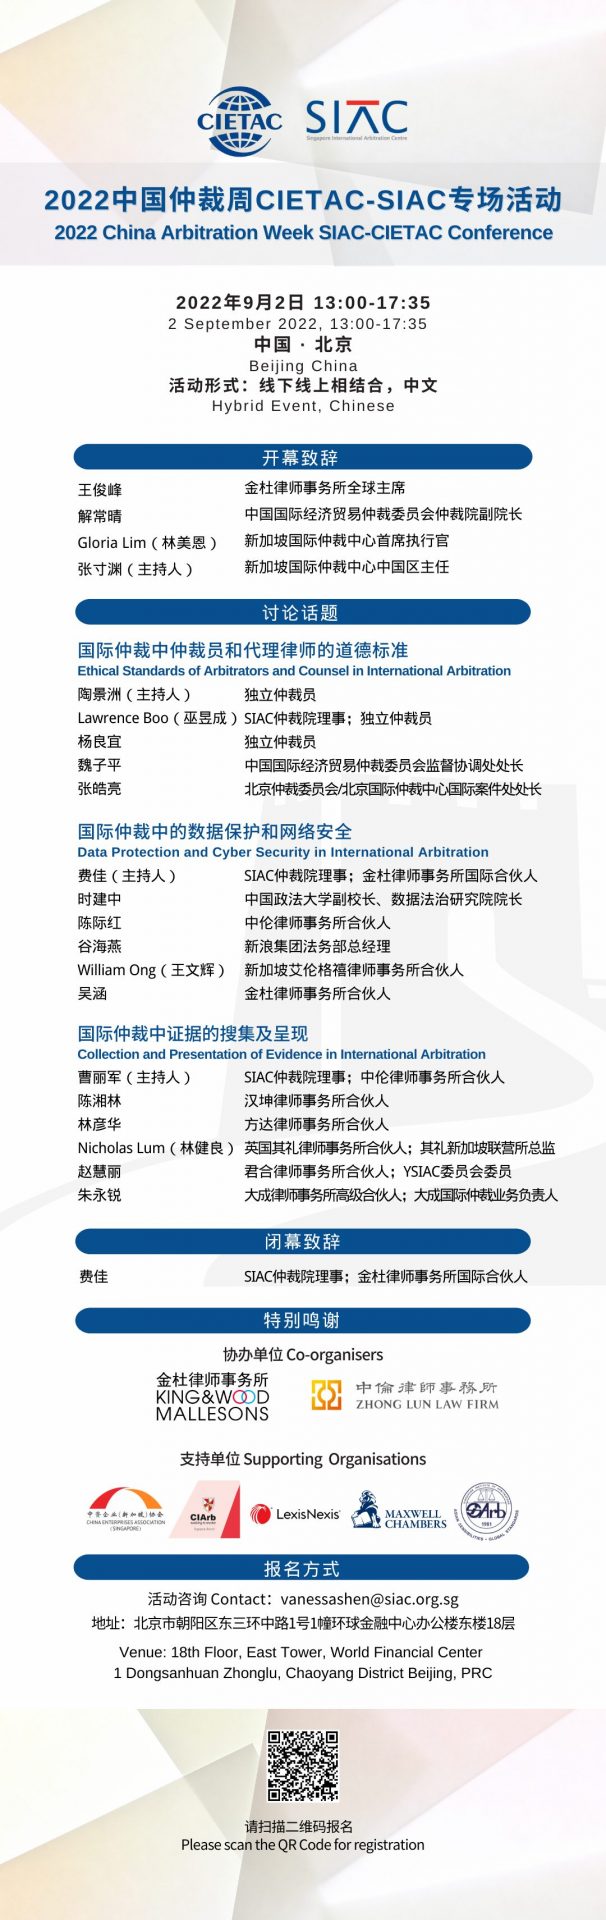 2022 SIAC-CIETAC Conference Invitation Flyer